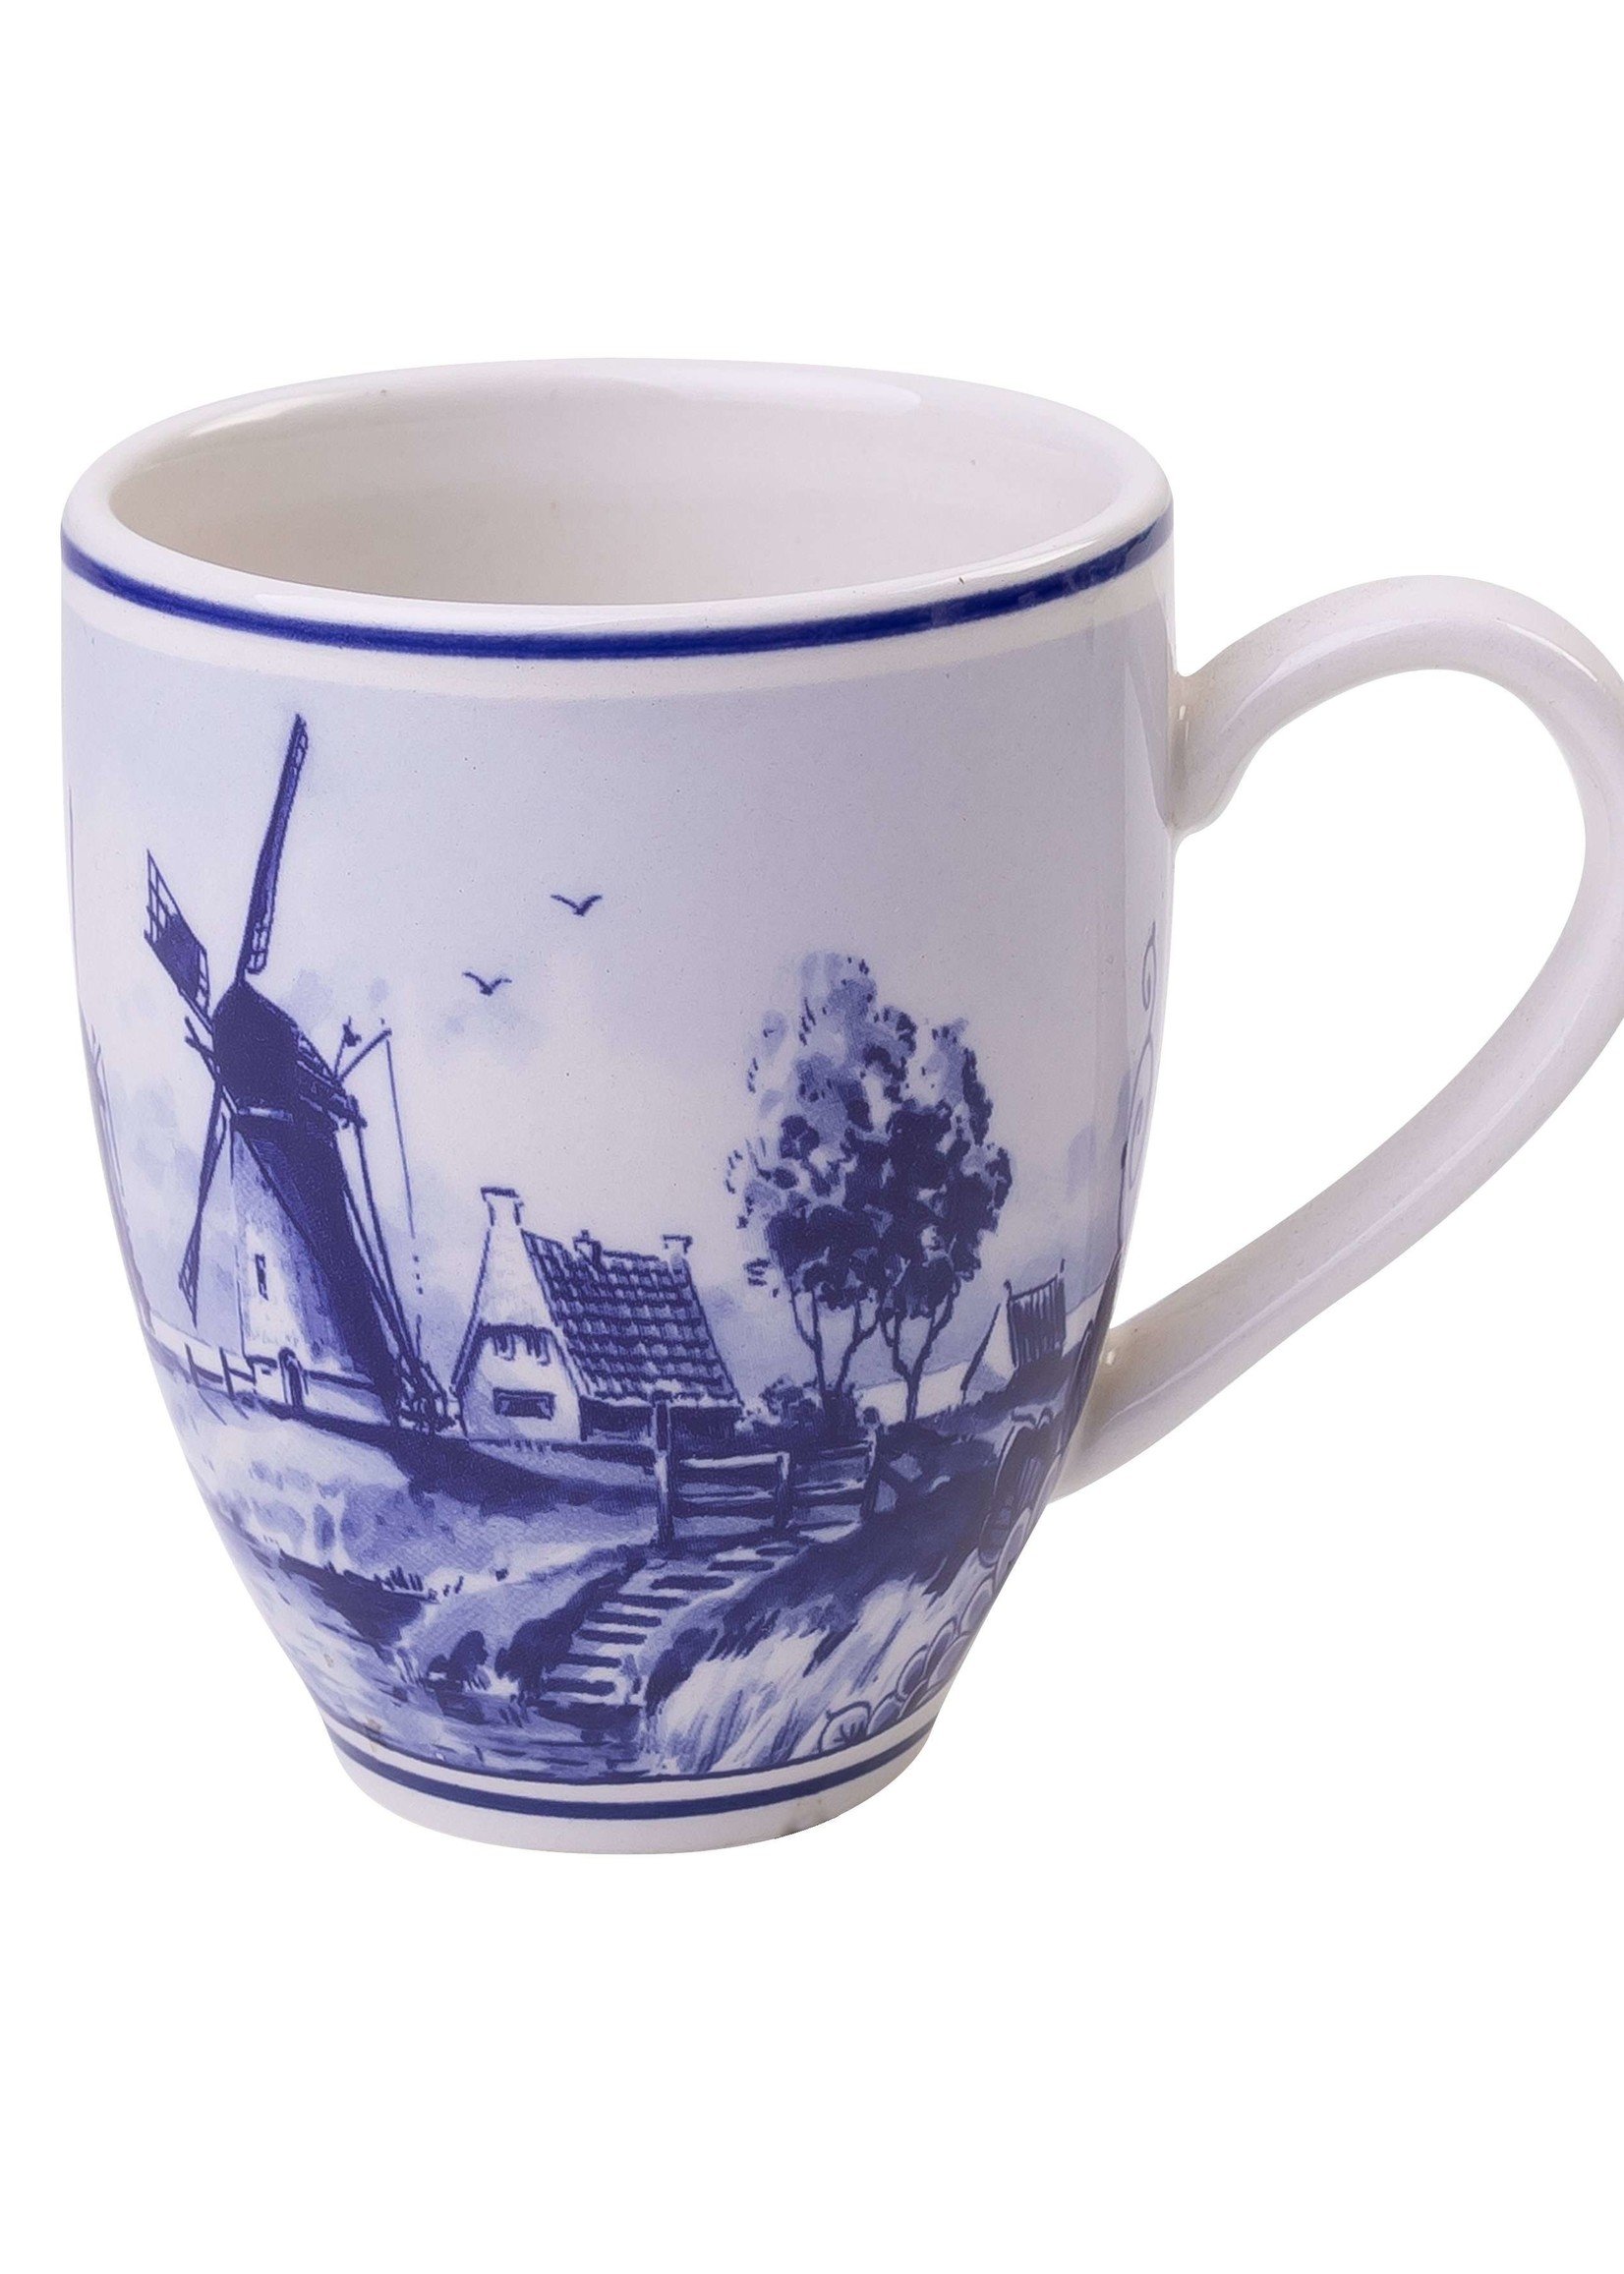 Delft Blue Senseo Mug with a Windmill